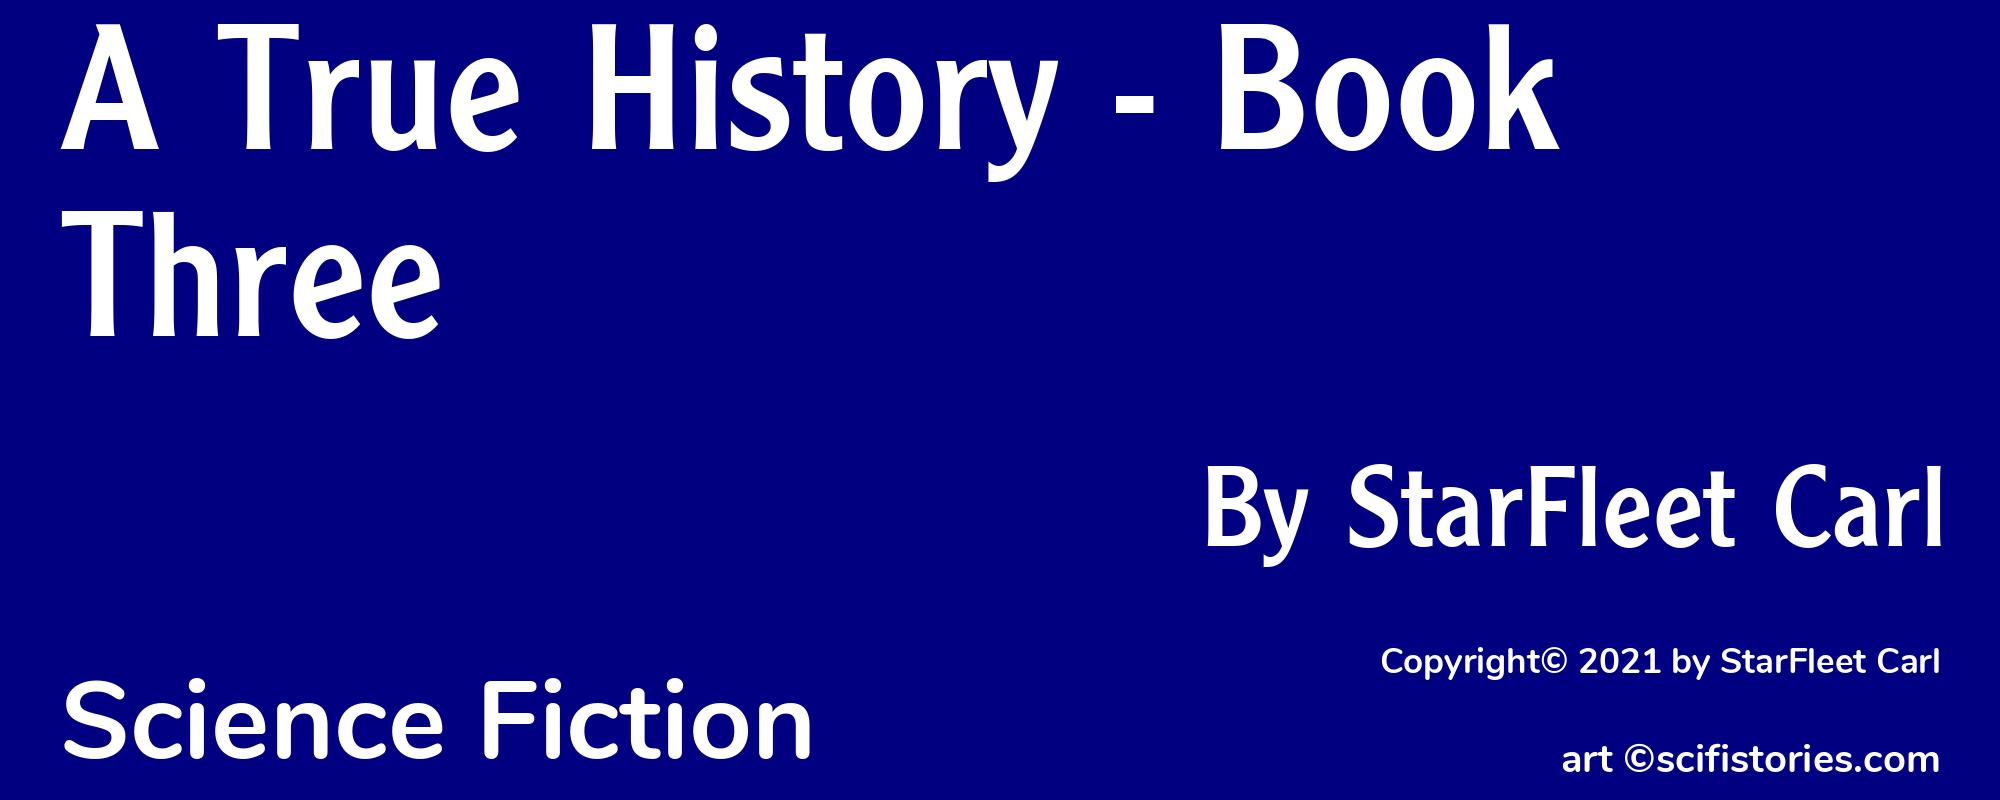 A True History - Book Three - Cover